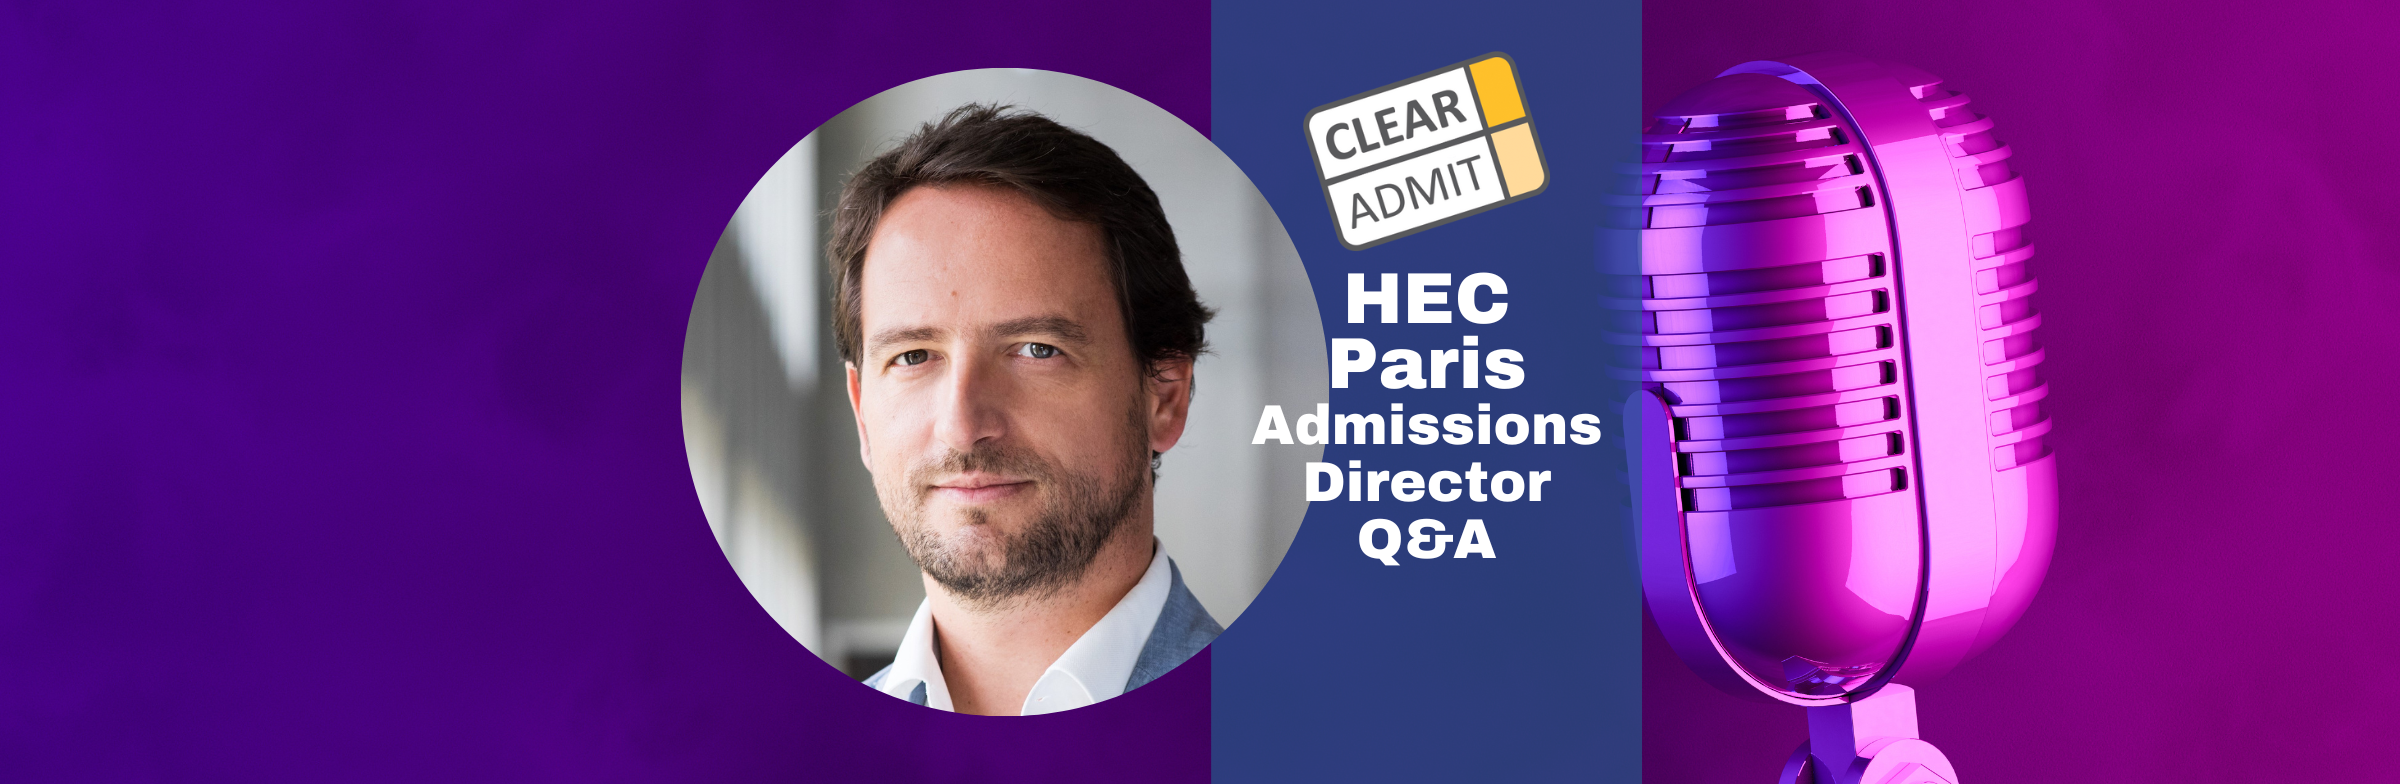 Image for Admissions Director Q&A: Benoit Banchereau of HEC Paris